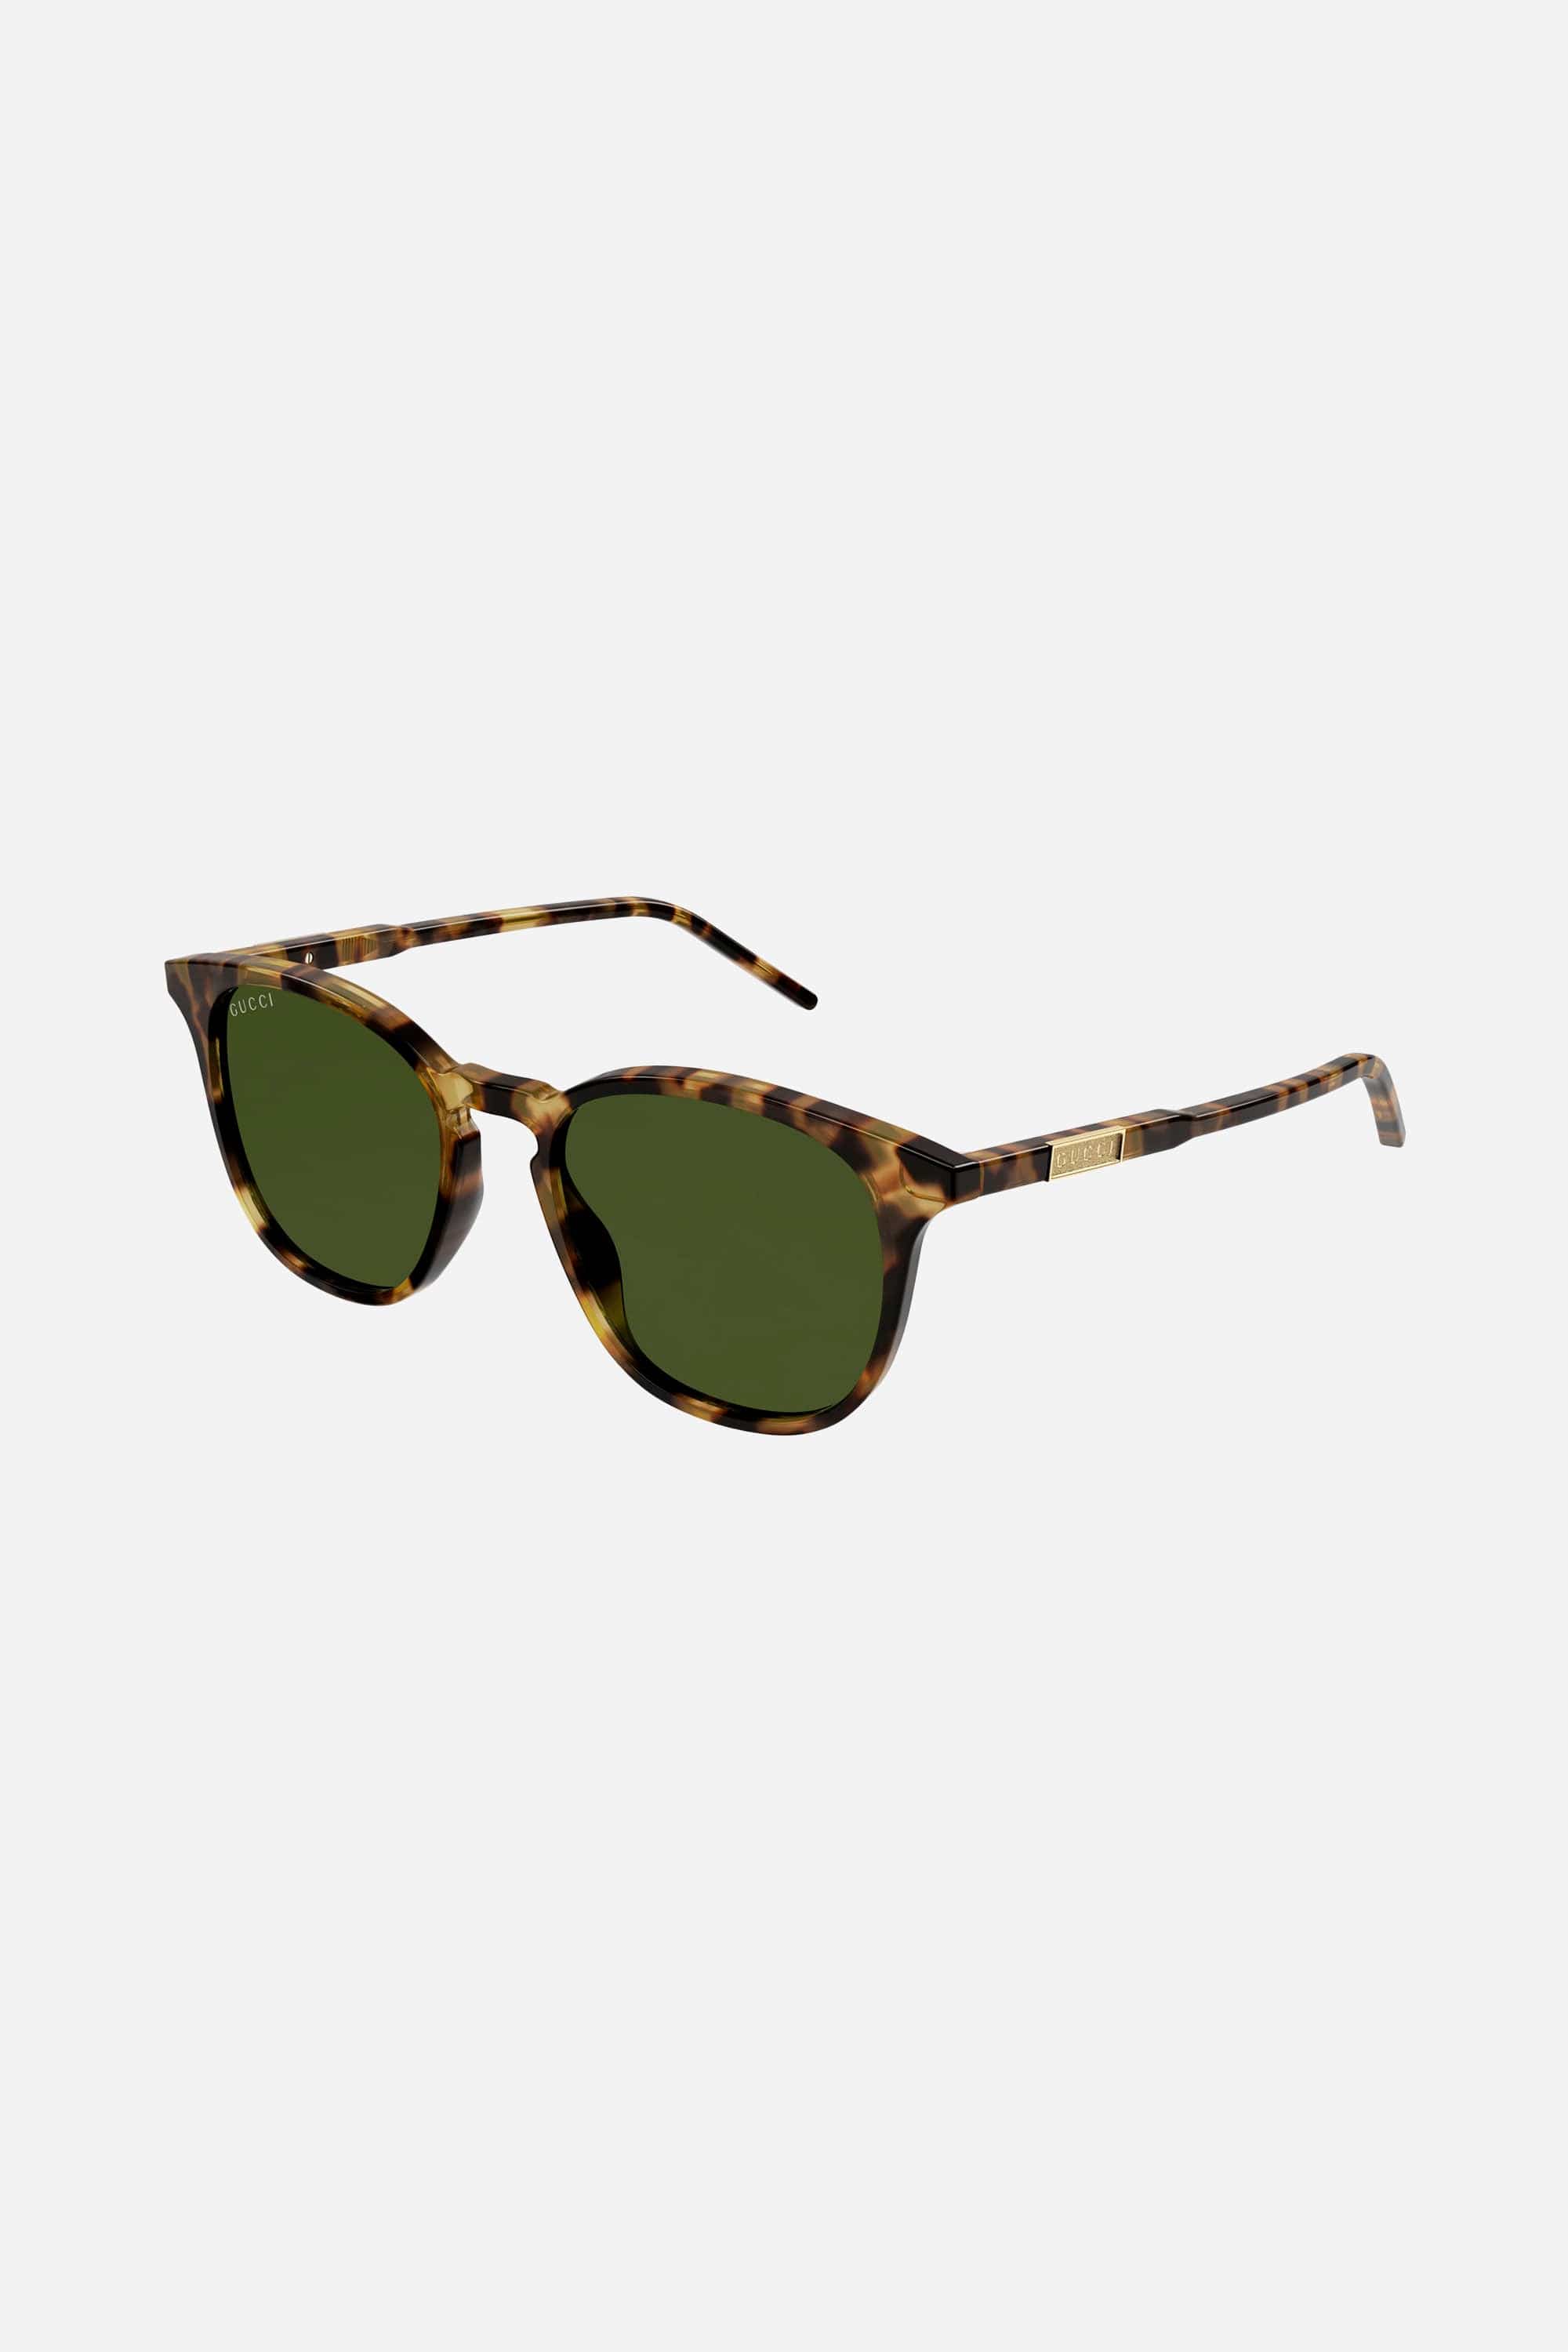 Gucci spotted havana men sunglasses - Eyewear Club